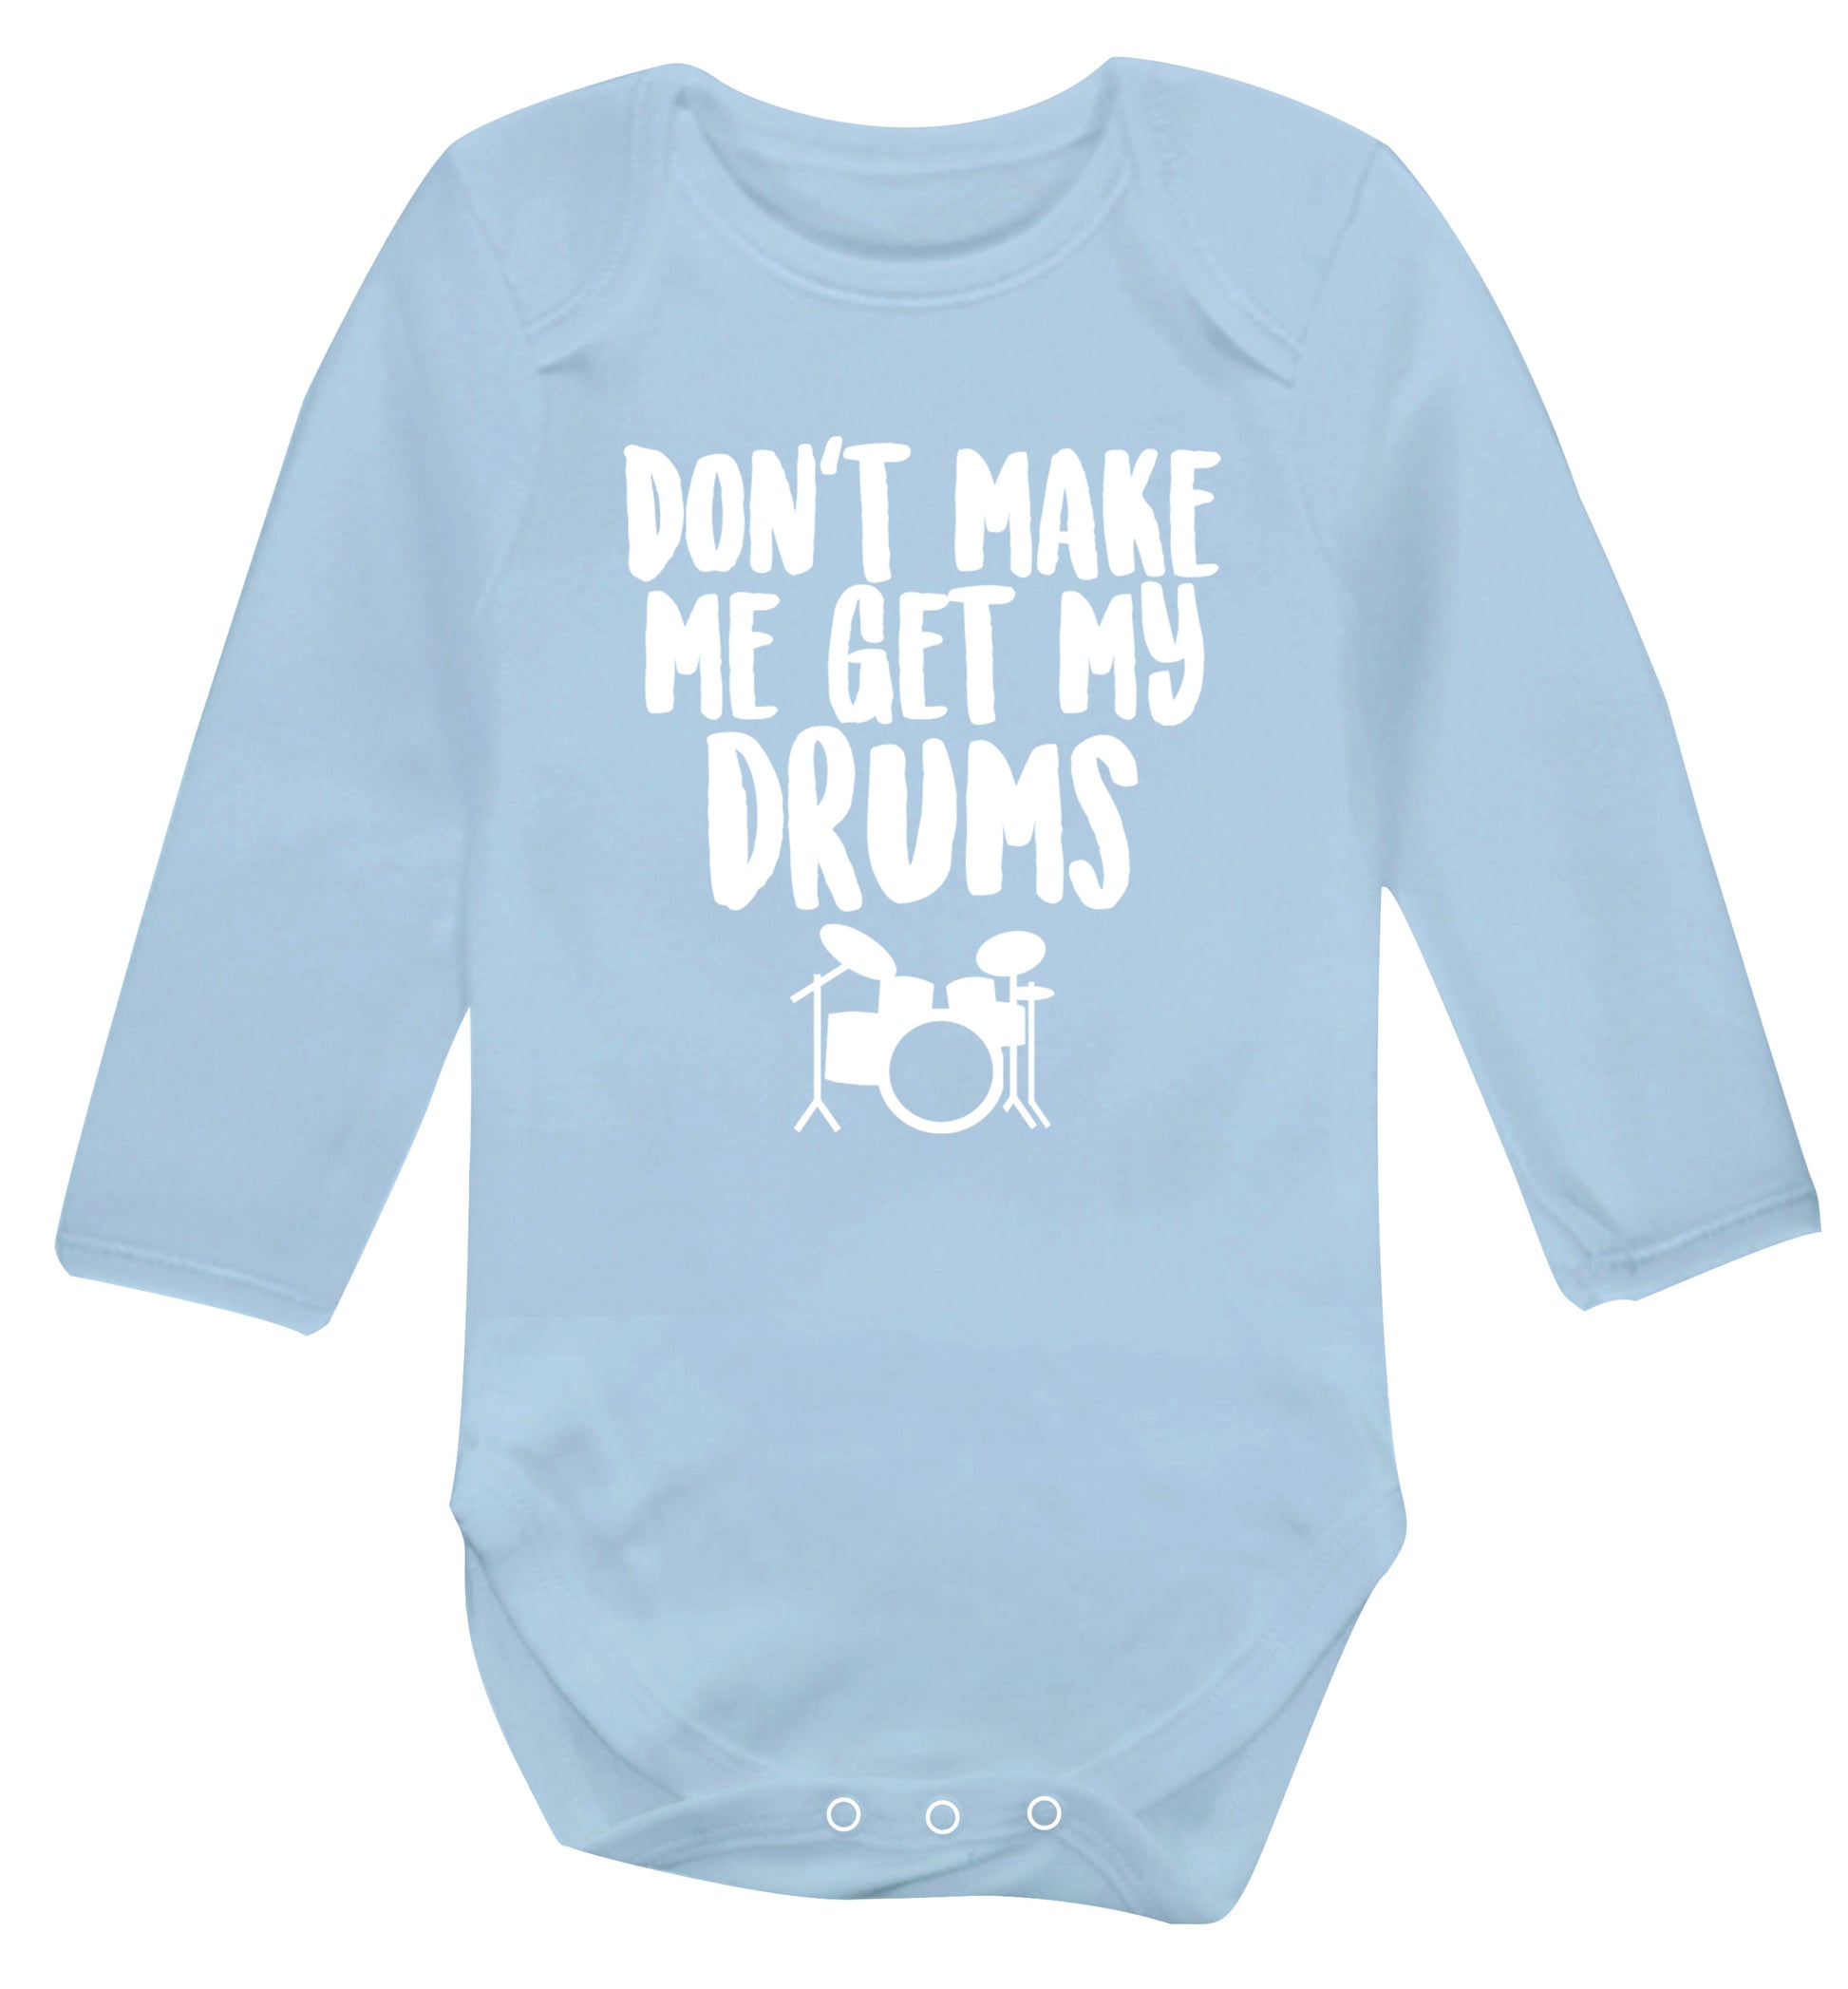 Don't make me get my drums Baby Vest long sleeved pale blue 6-12 months